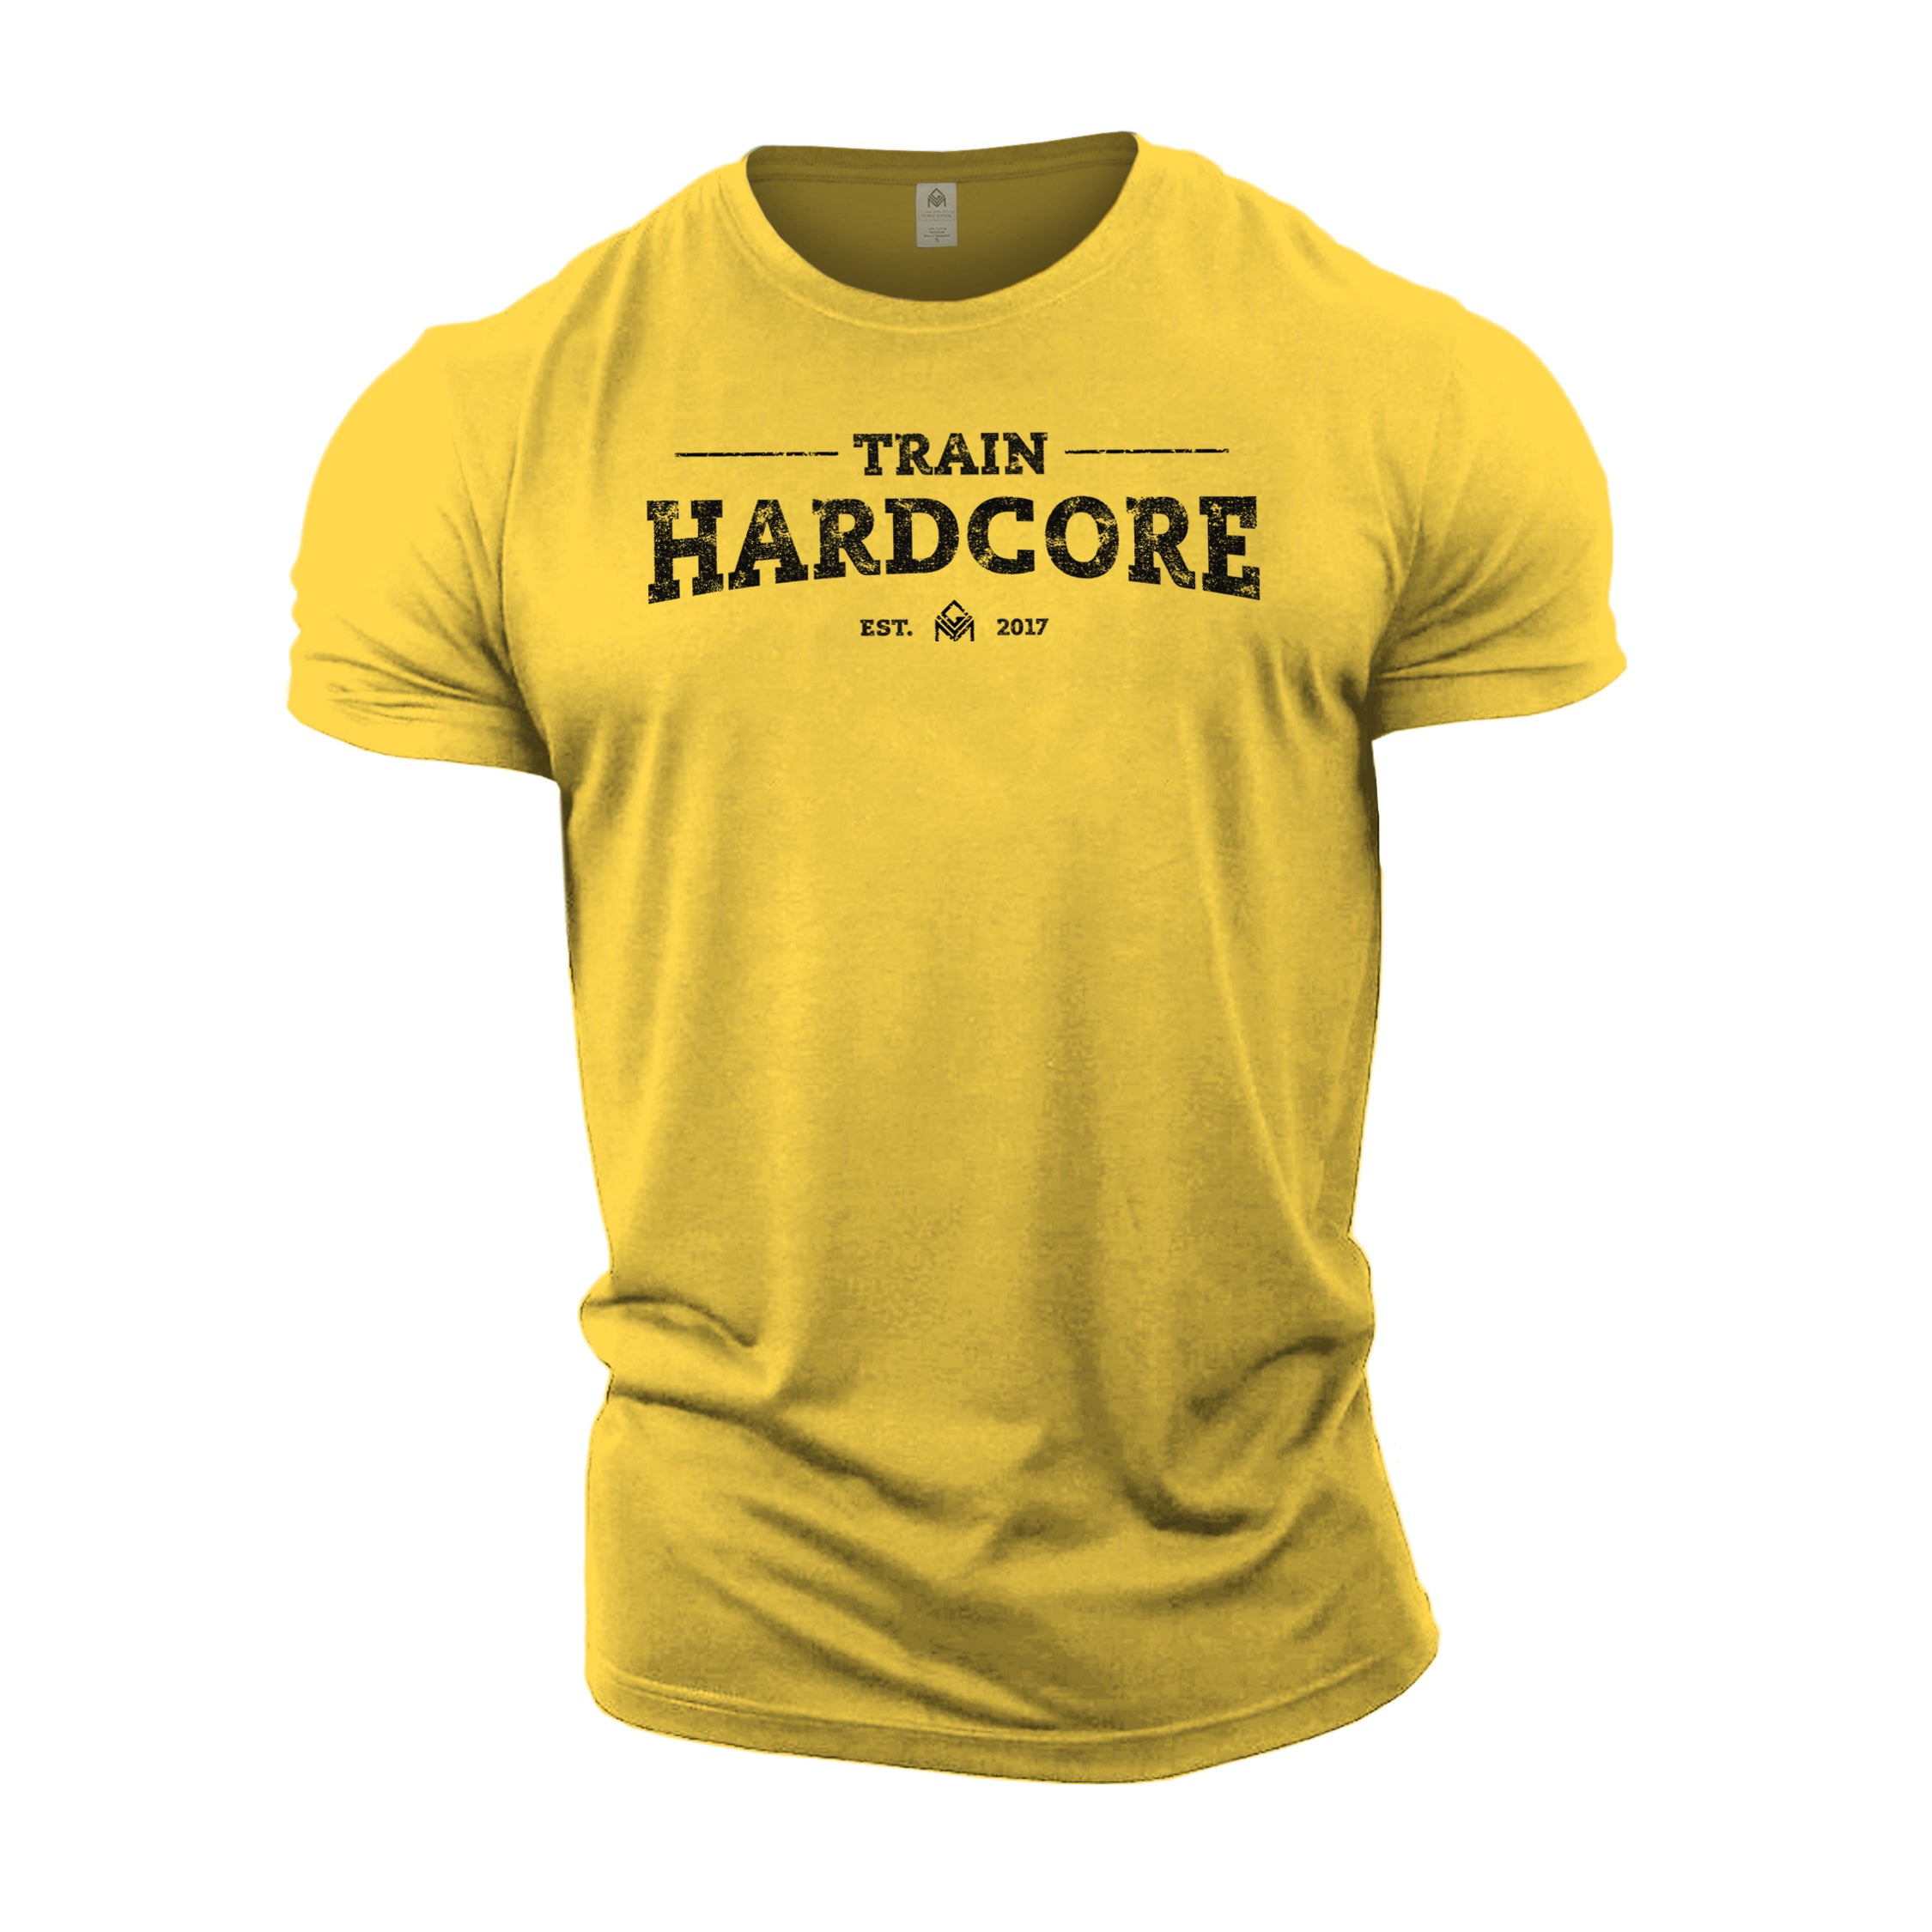 Train HARDCORE - Gym T-Shirt